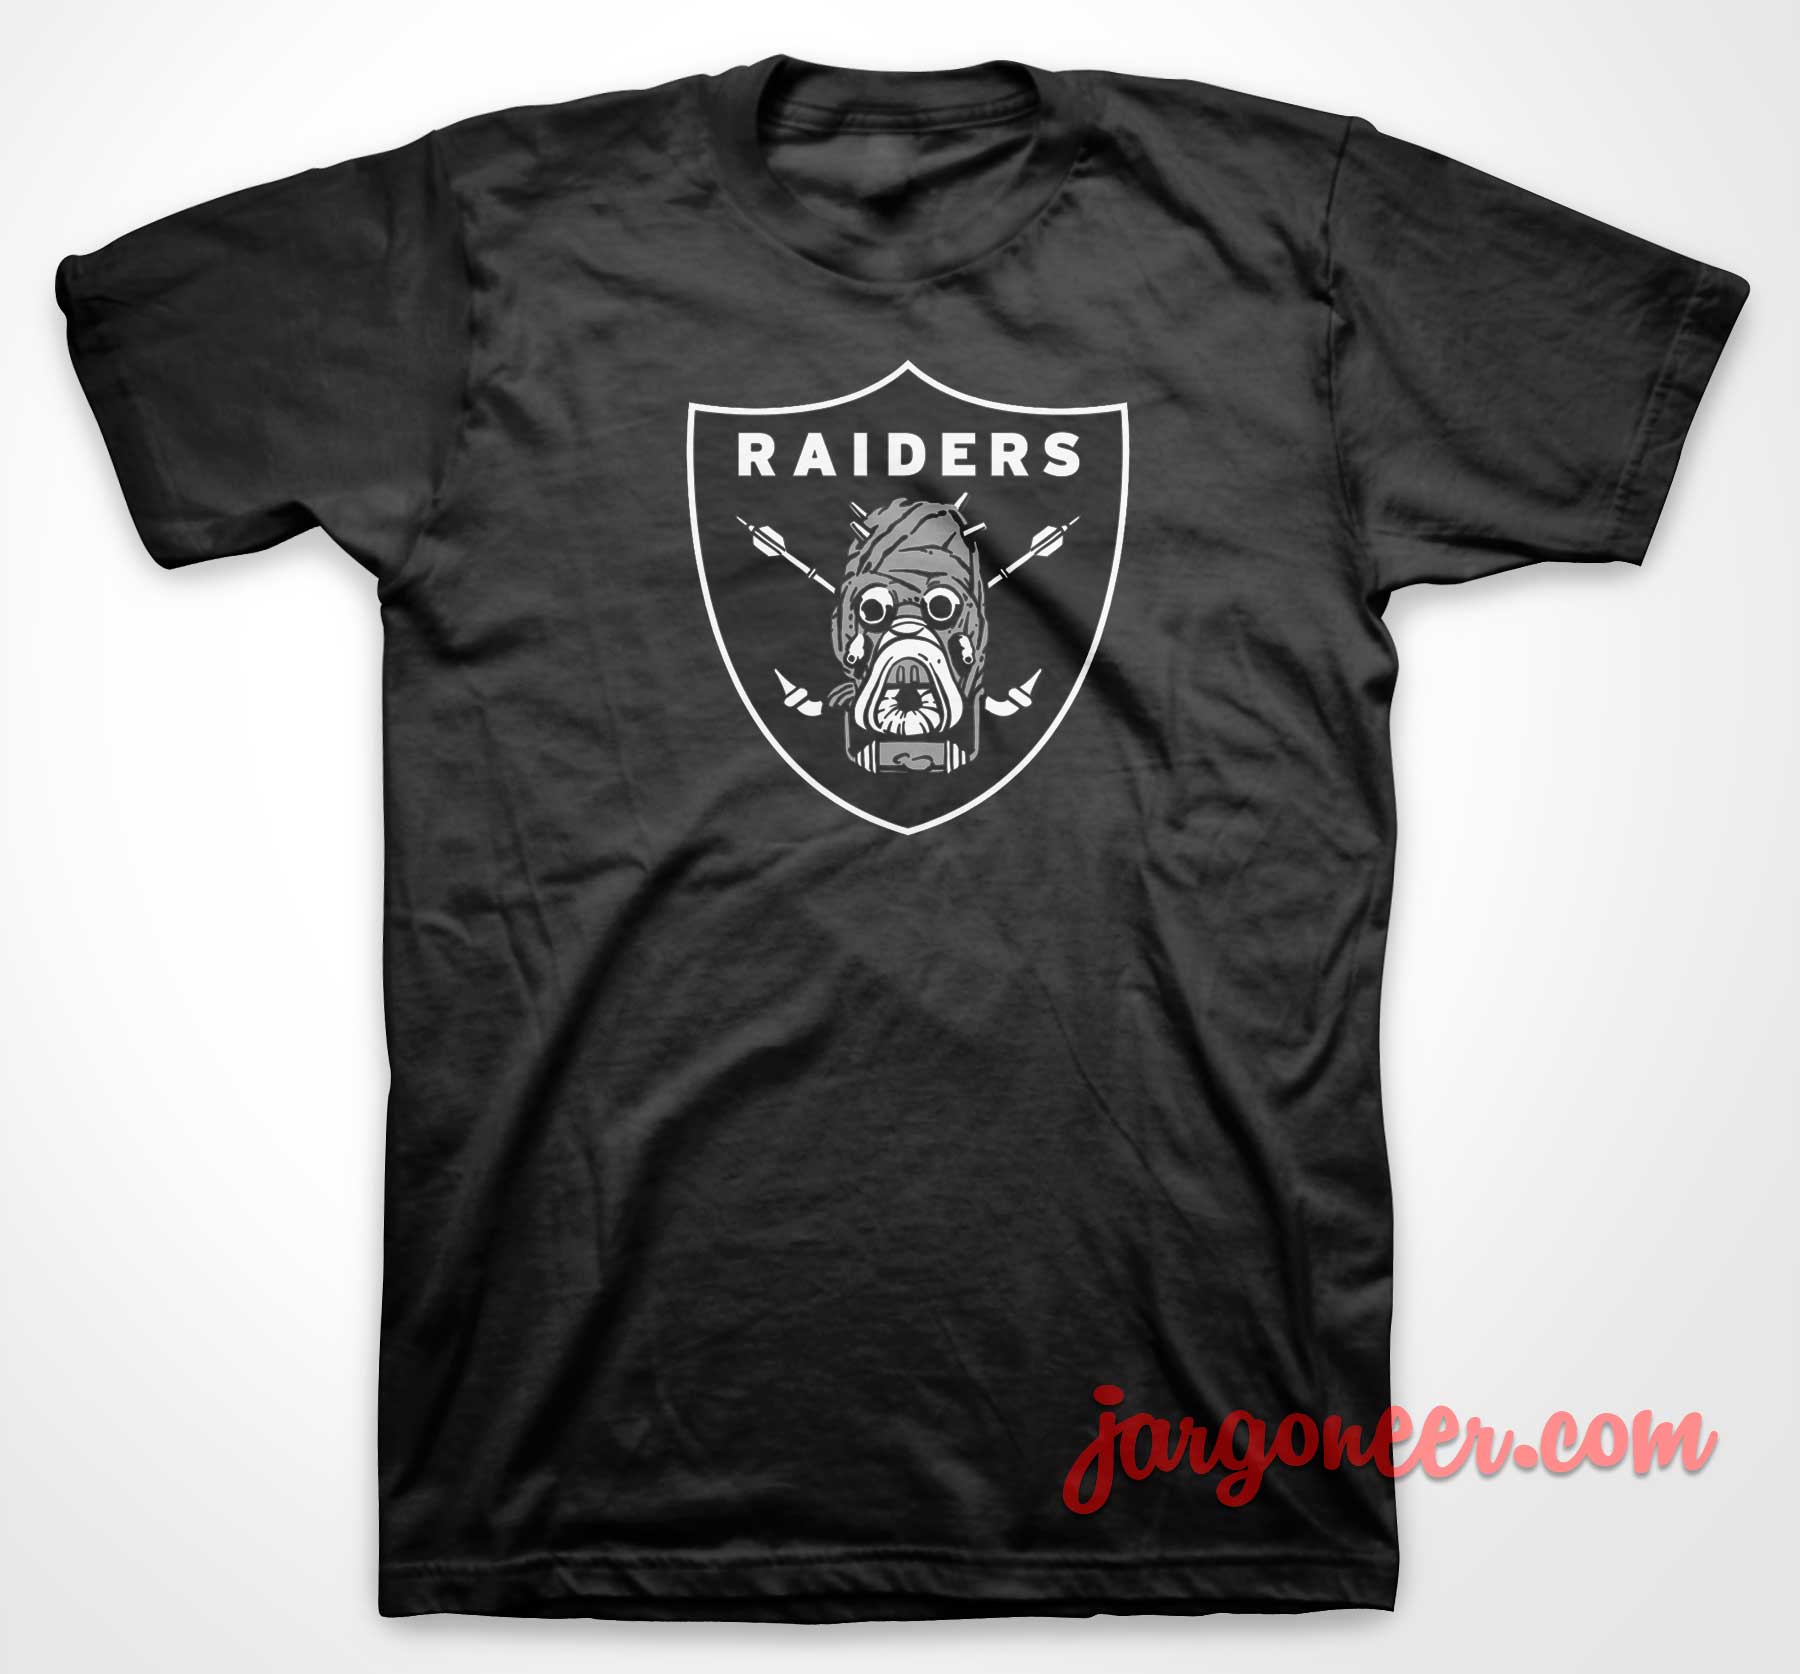 Raiders Star Wars - Shop Unique Graphic Cool Shirt Designs